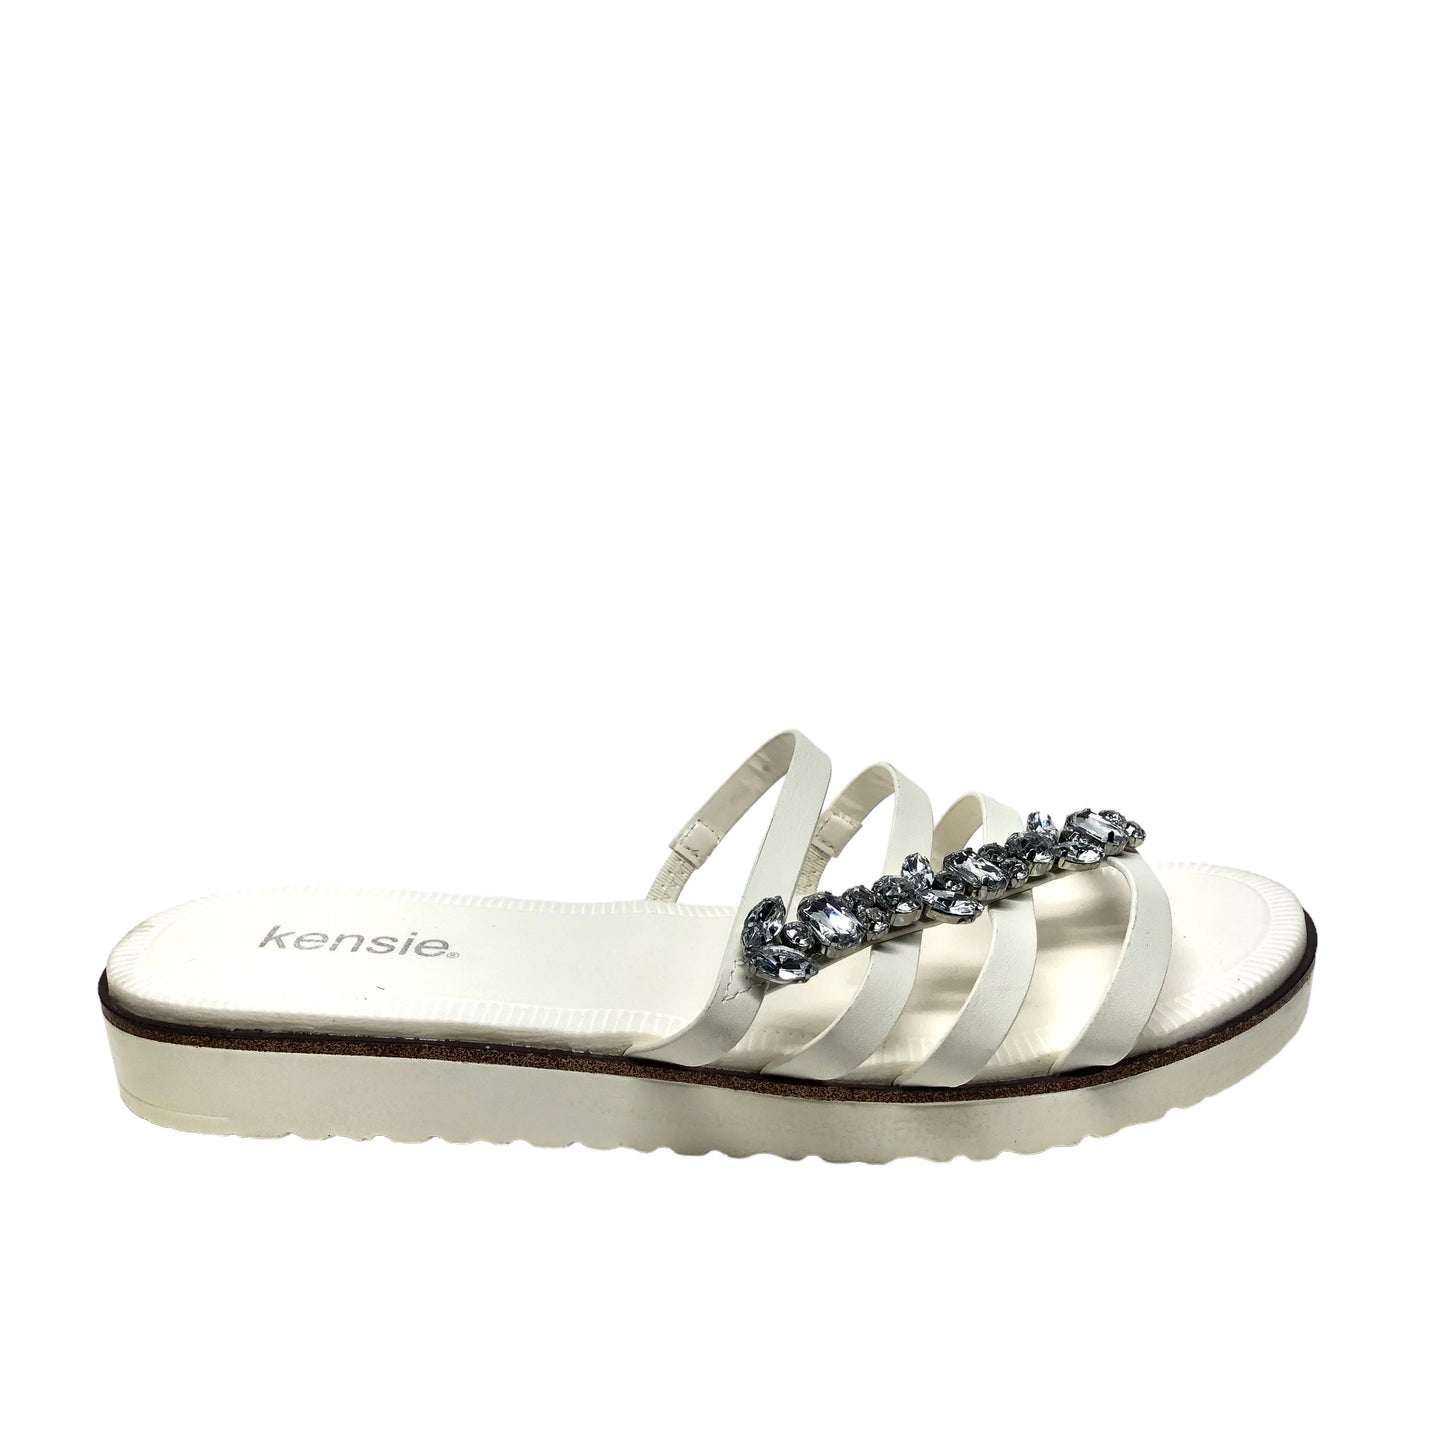 White Sandals Flats Kensie, Size 9